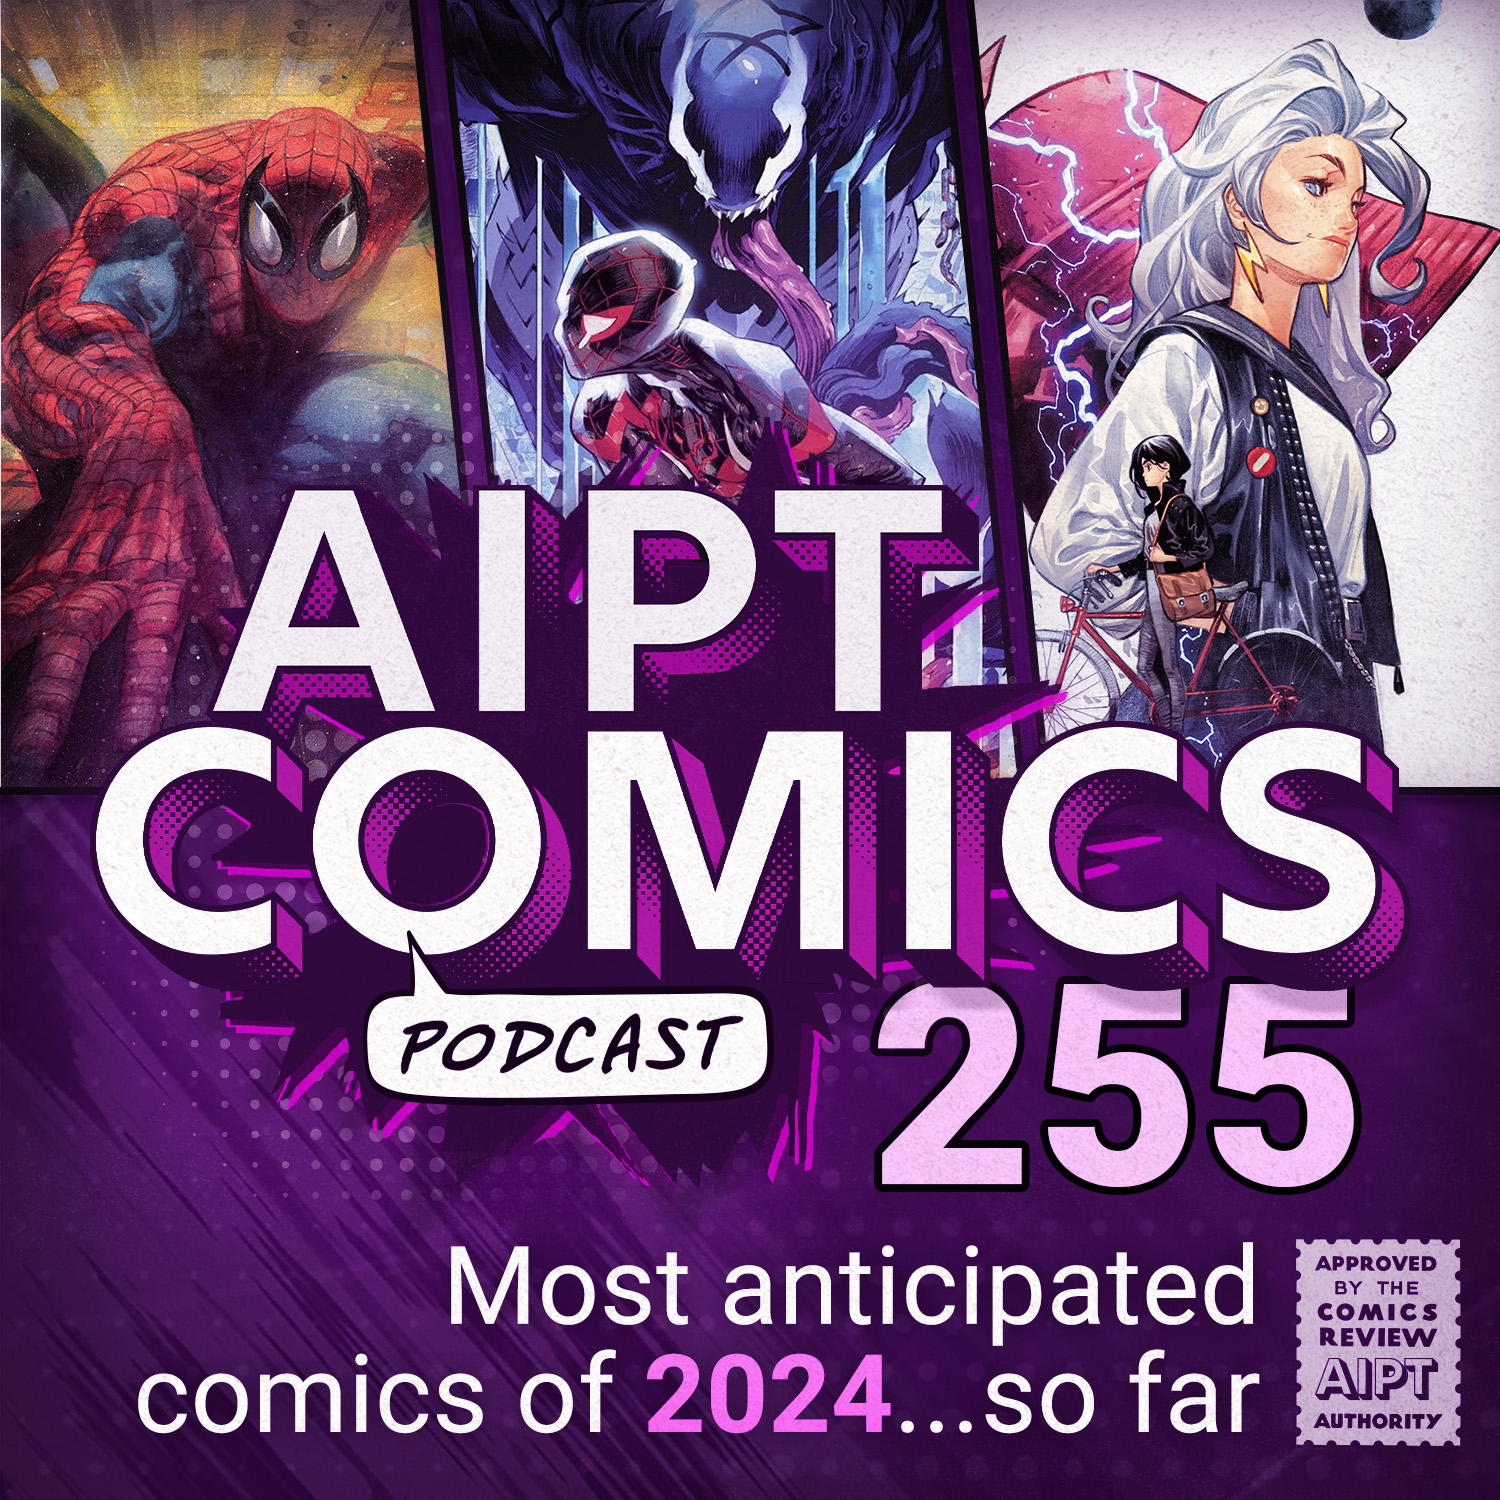 AIPT Comics Podcast Episode 255: Most anticipated comics of 2024...so far